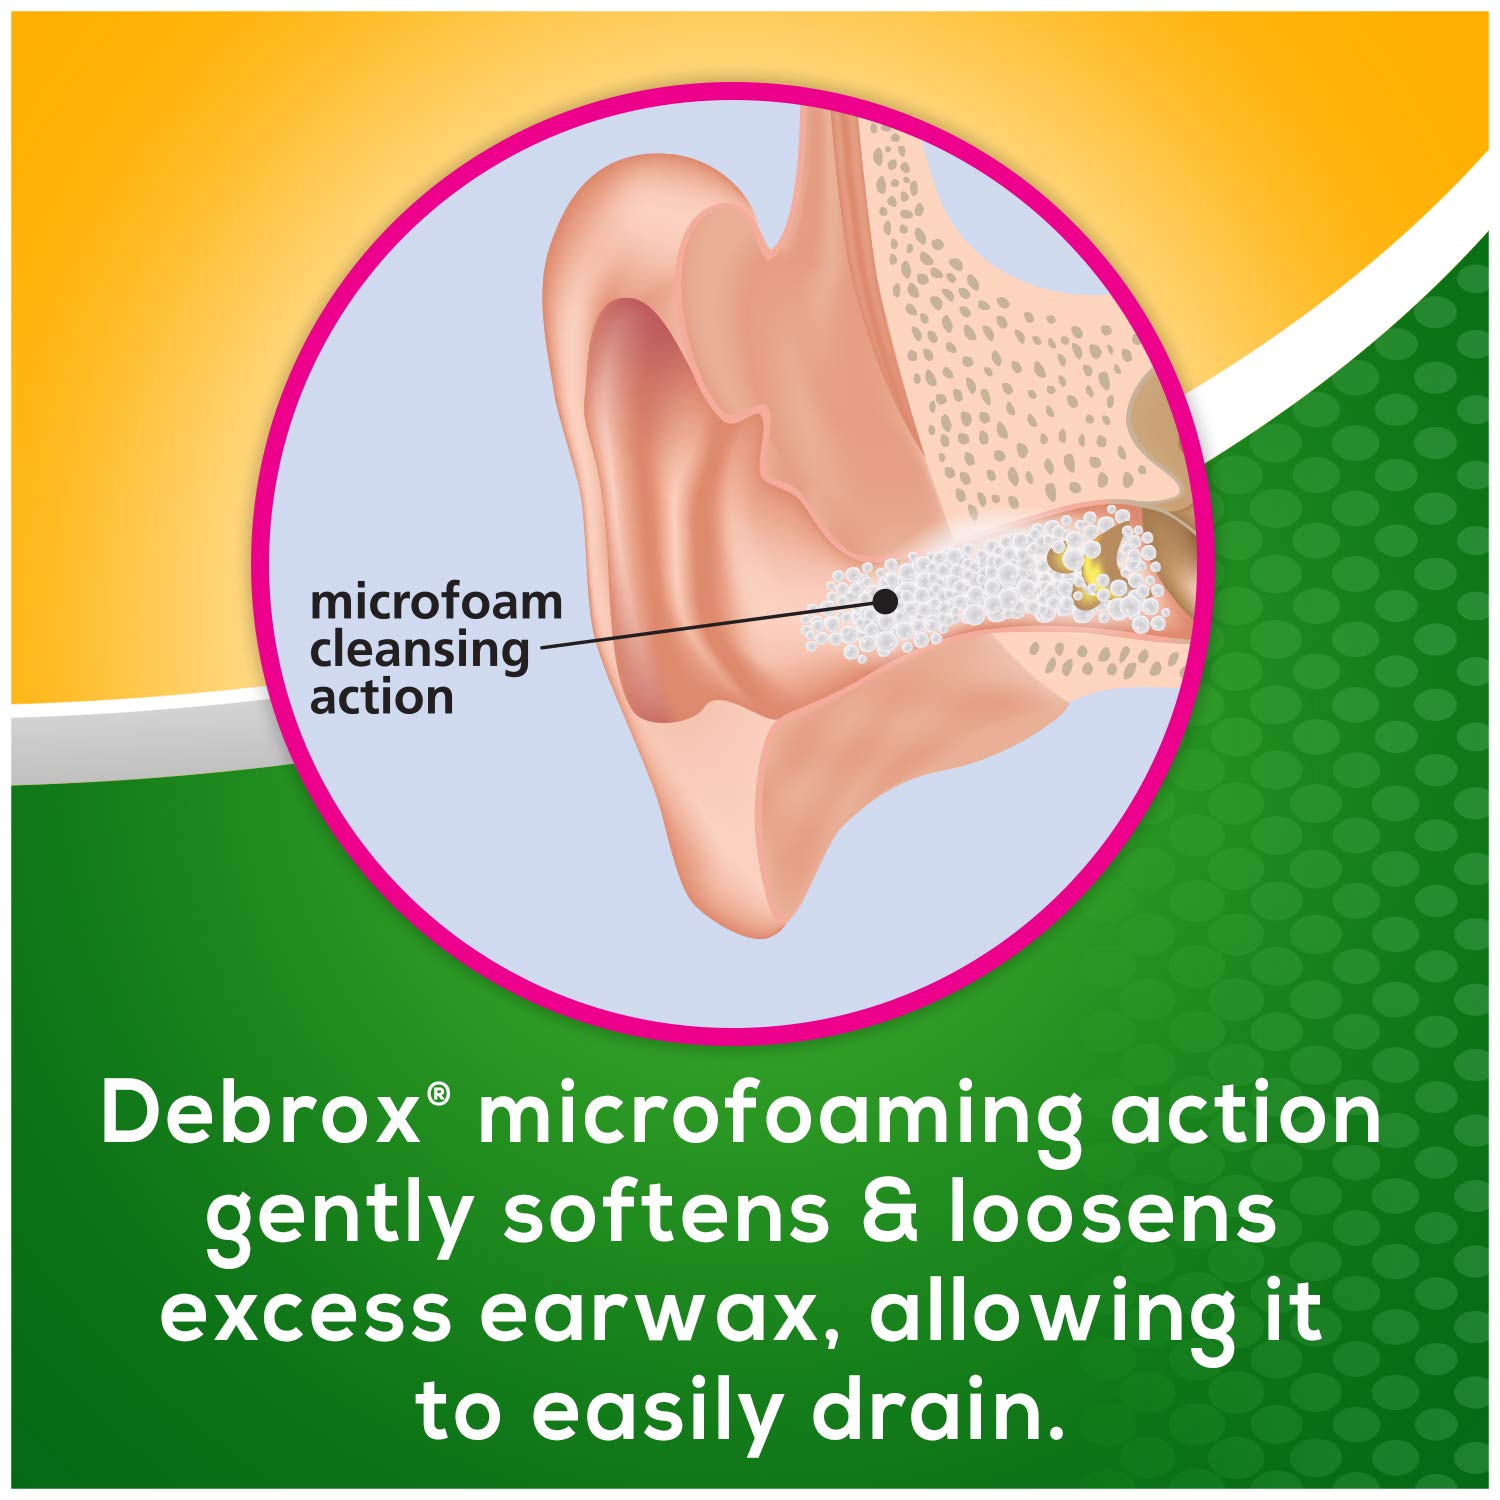 Debrox Earwax Removal Aid, 0.5 oz Earwax Removal Drops